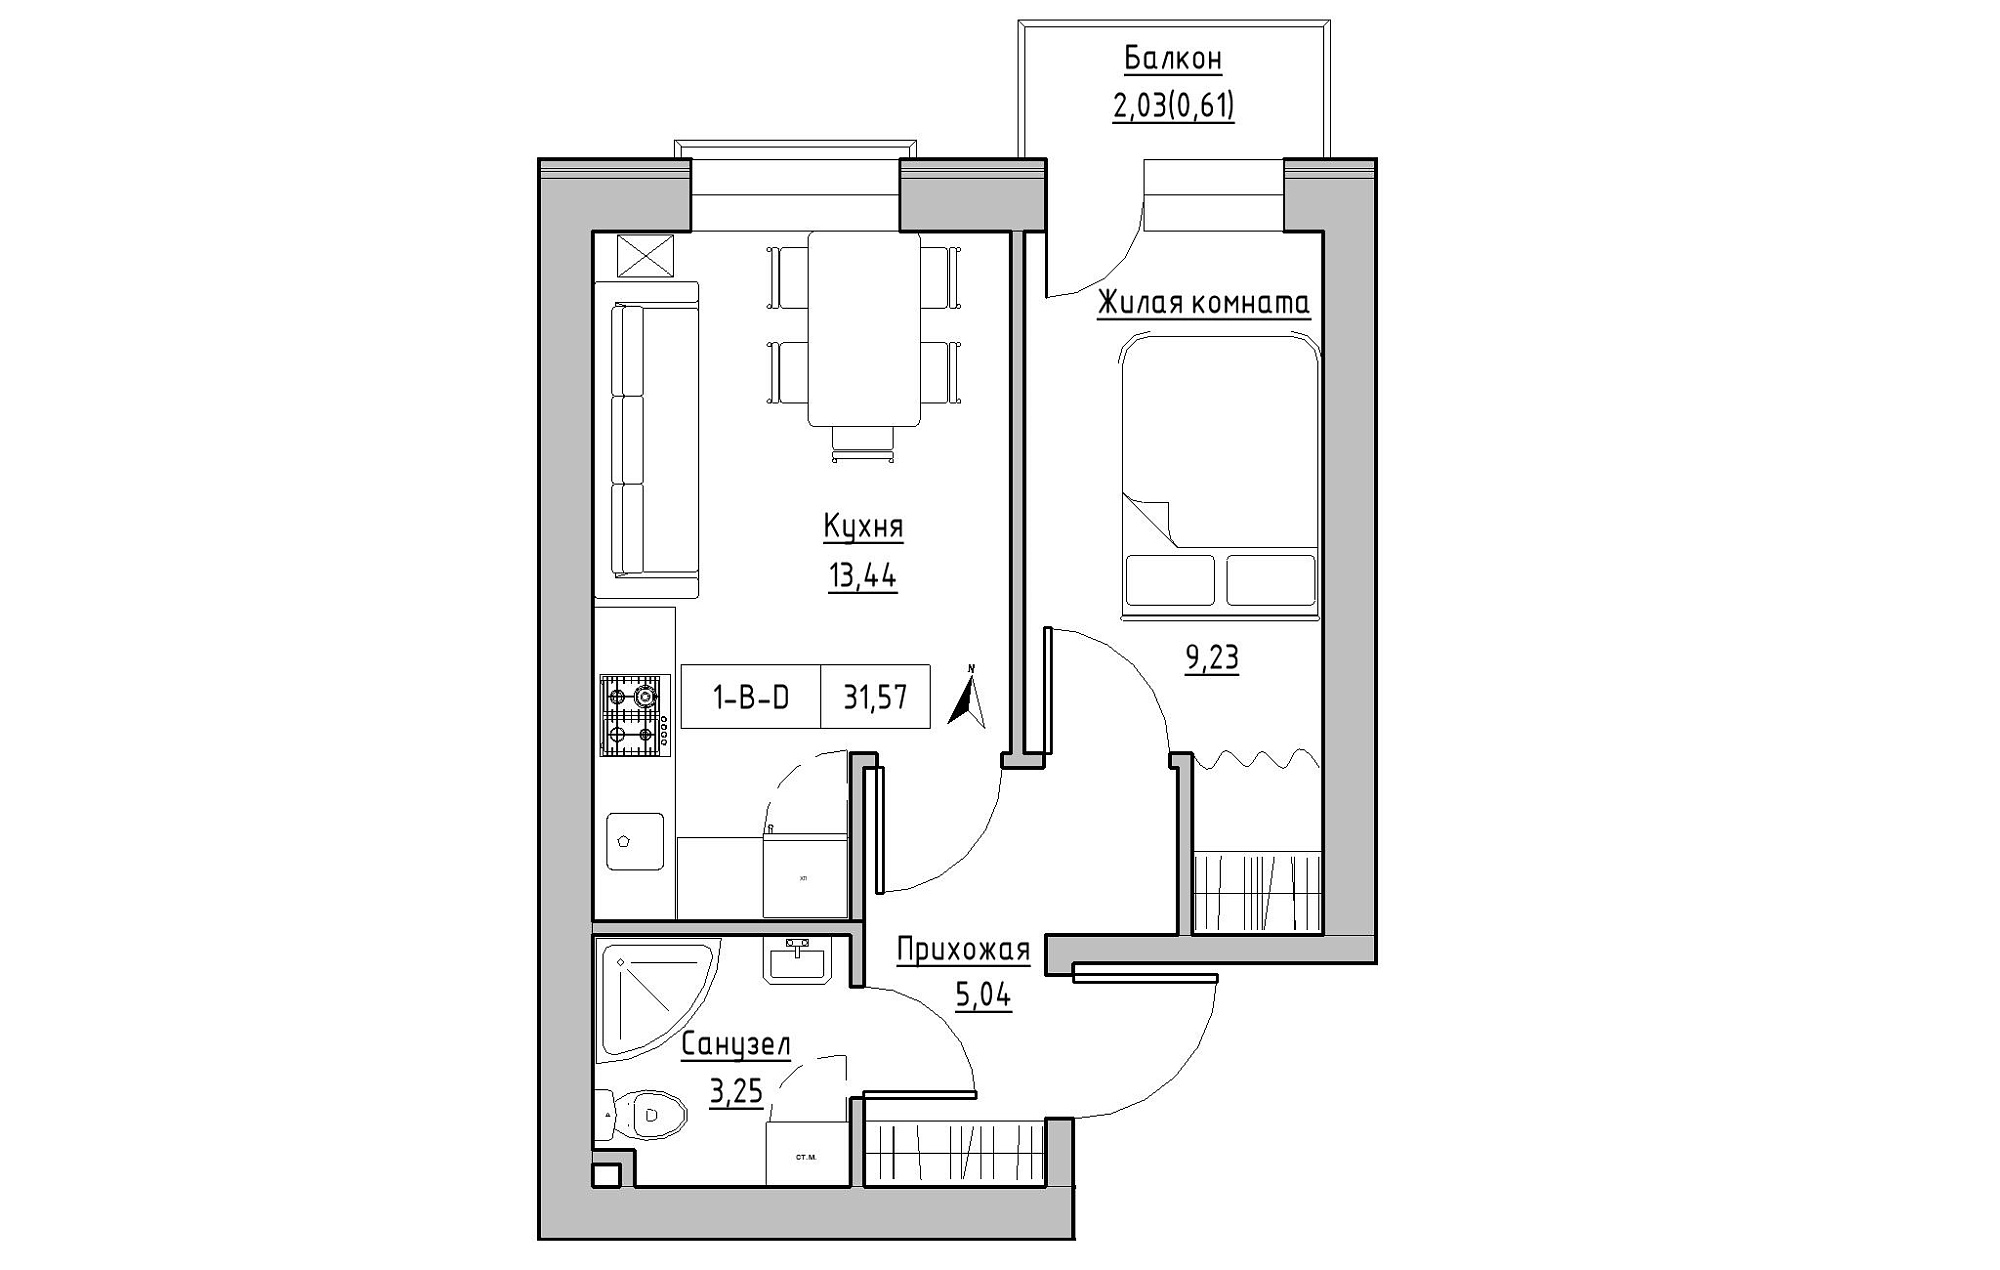 Planning 1-rm flats area 31.57m2, KS-019-04/0013.